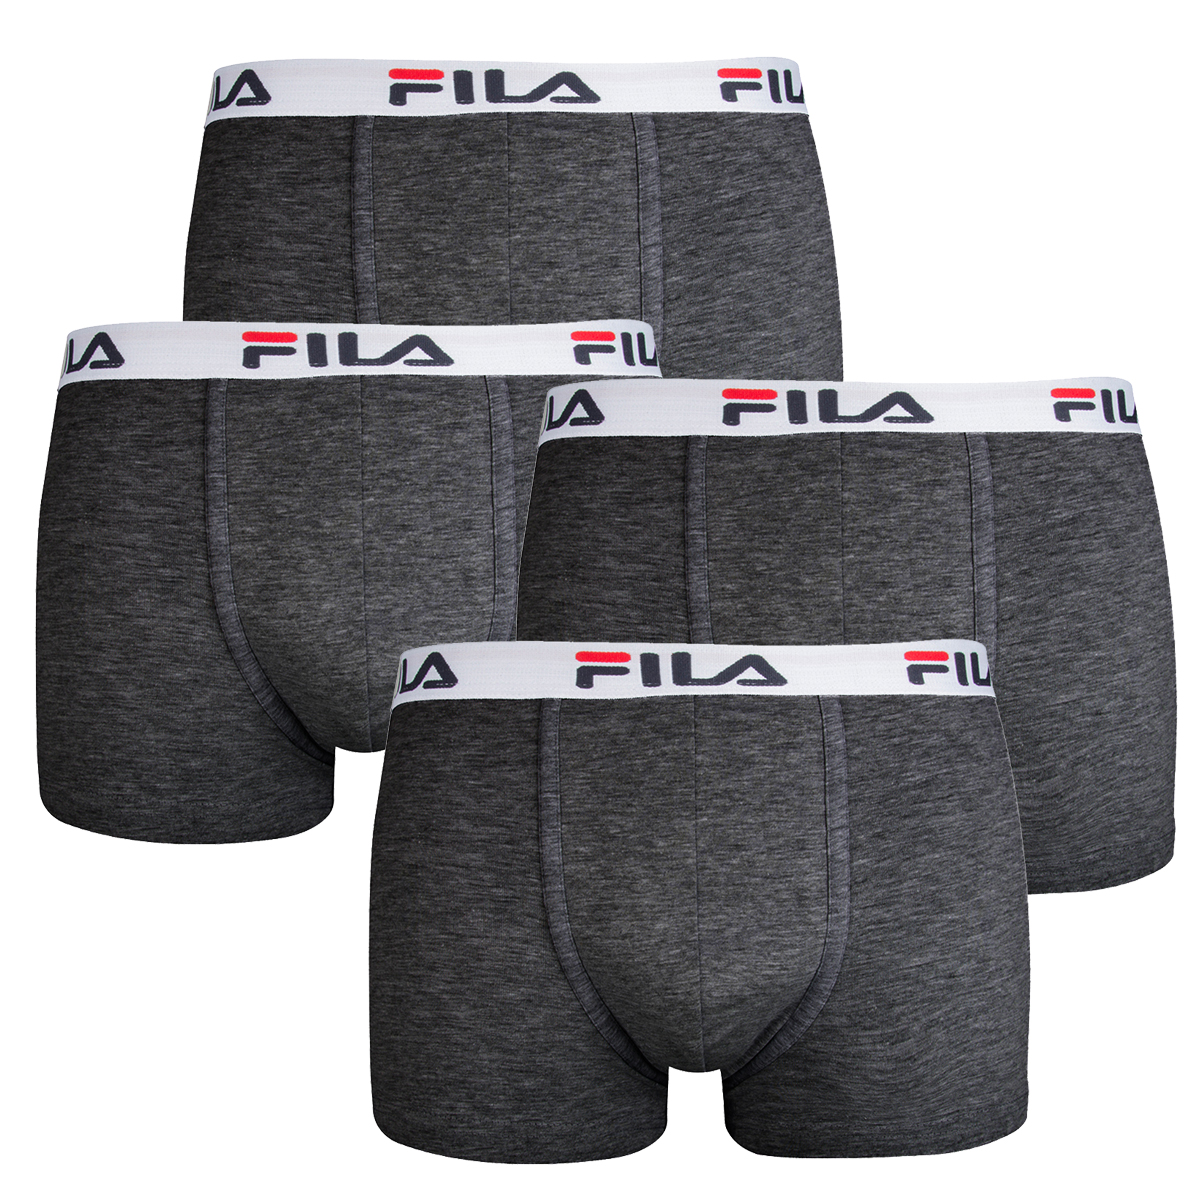 Fila 4er Vorteilspack Herren Boxershorts - Logo Pants - Einfarbig - Bequem - Stretch - viele Farben (Anthrazit, 2XL - 4er Pack)